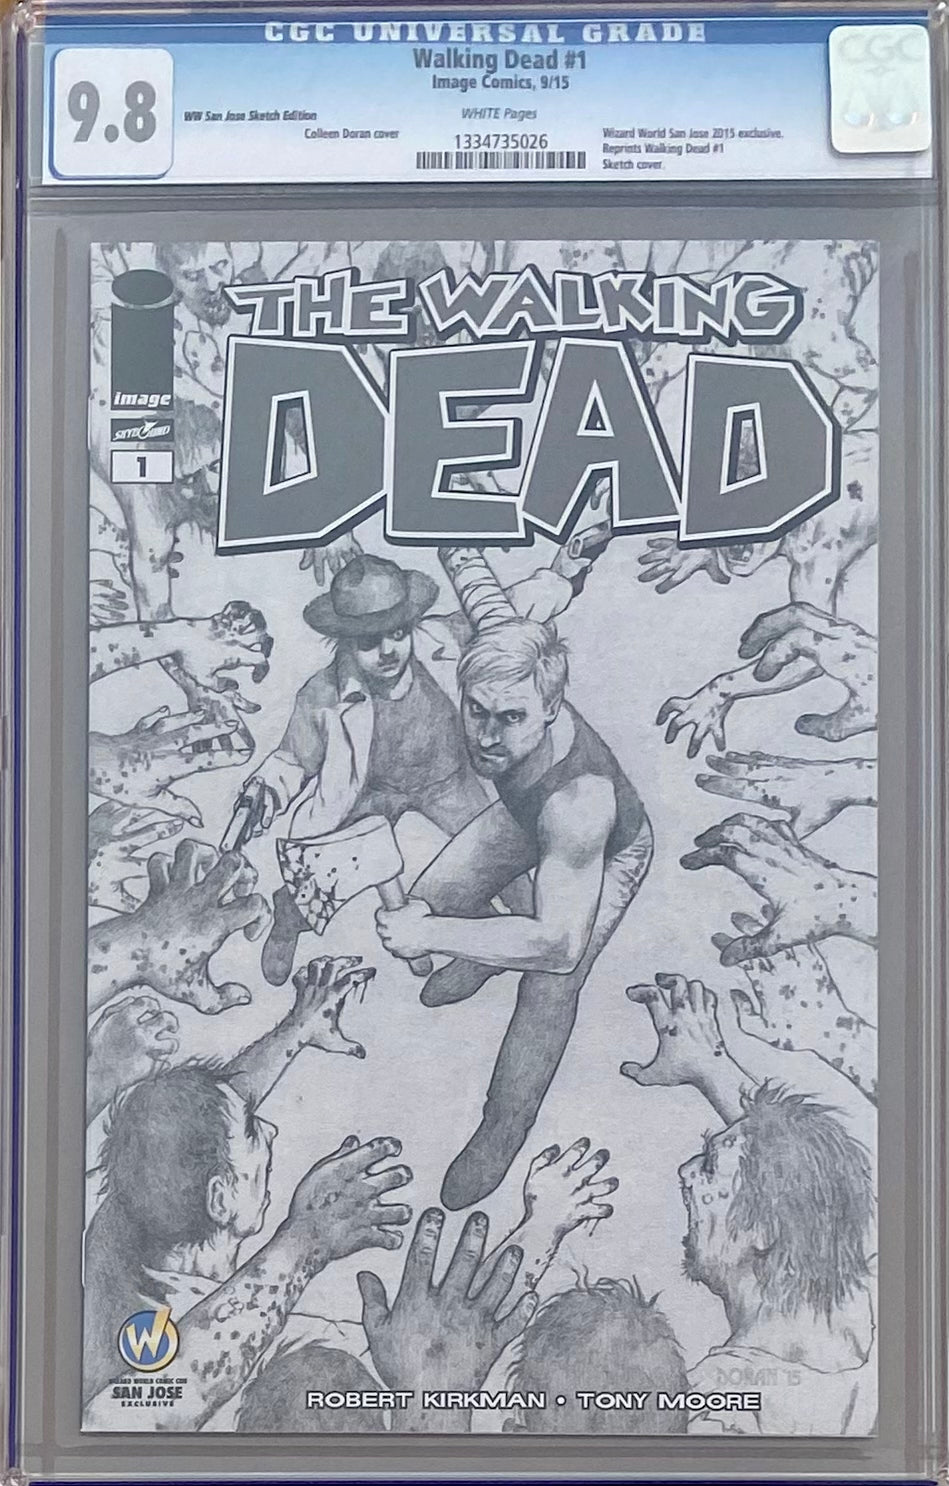 Walking Dead #1 Wizard World San Jose Sketch Edition Variant CGC 9.8